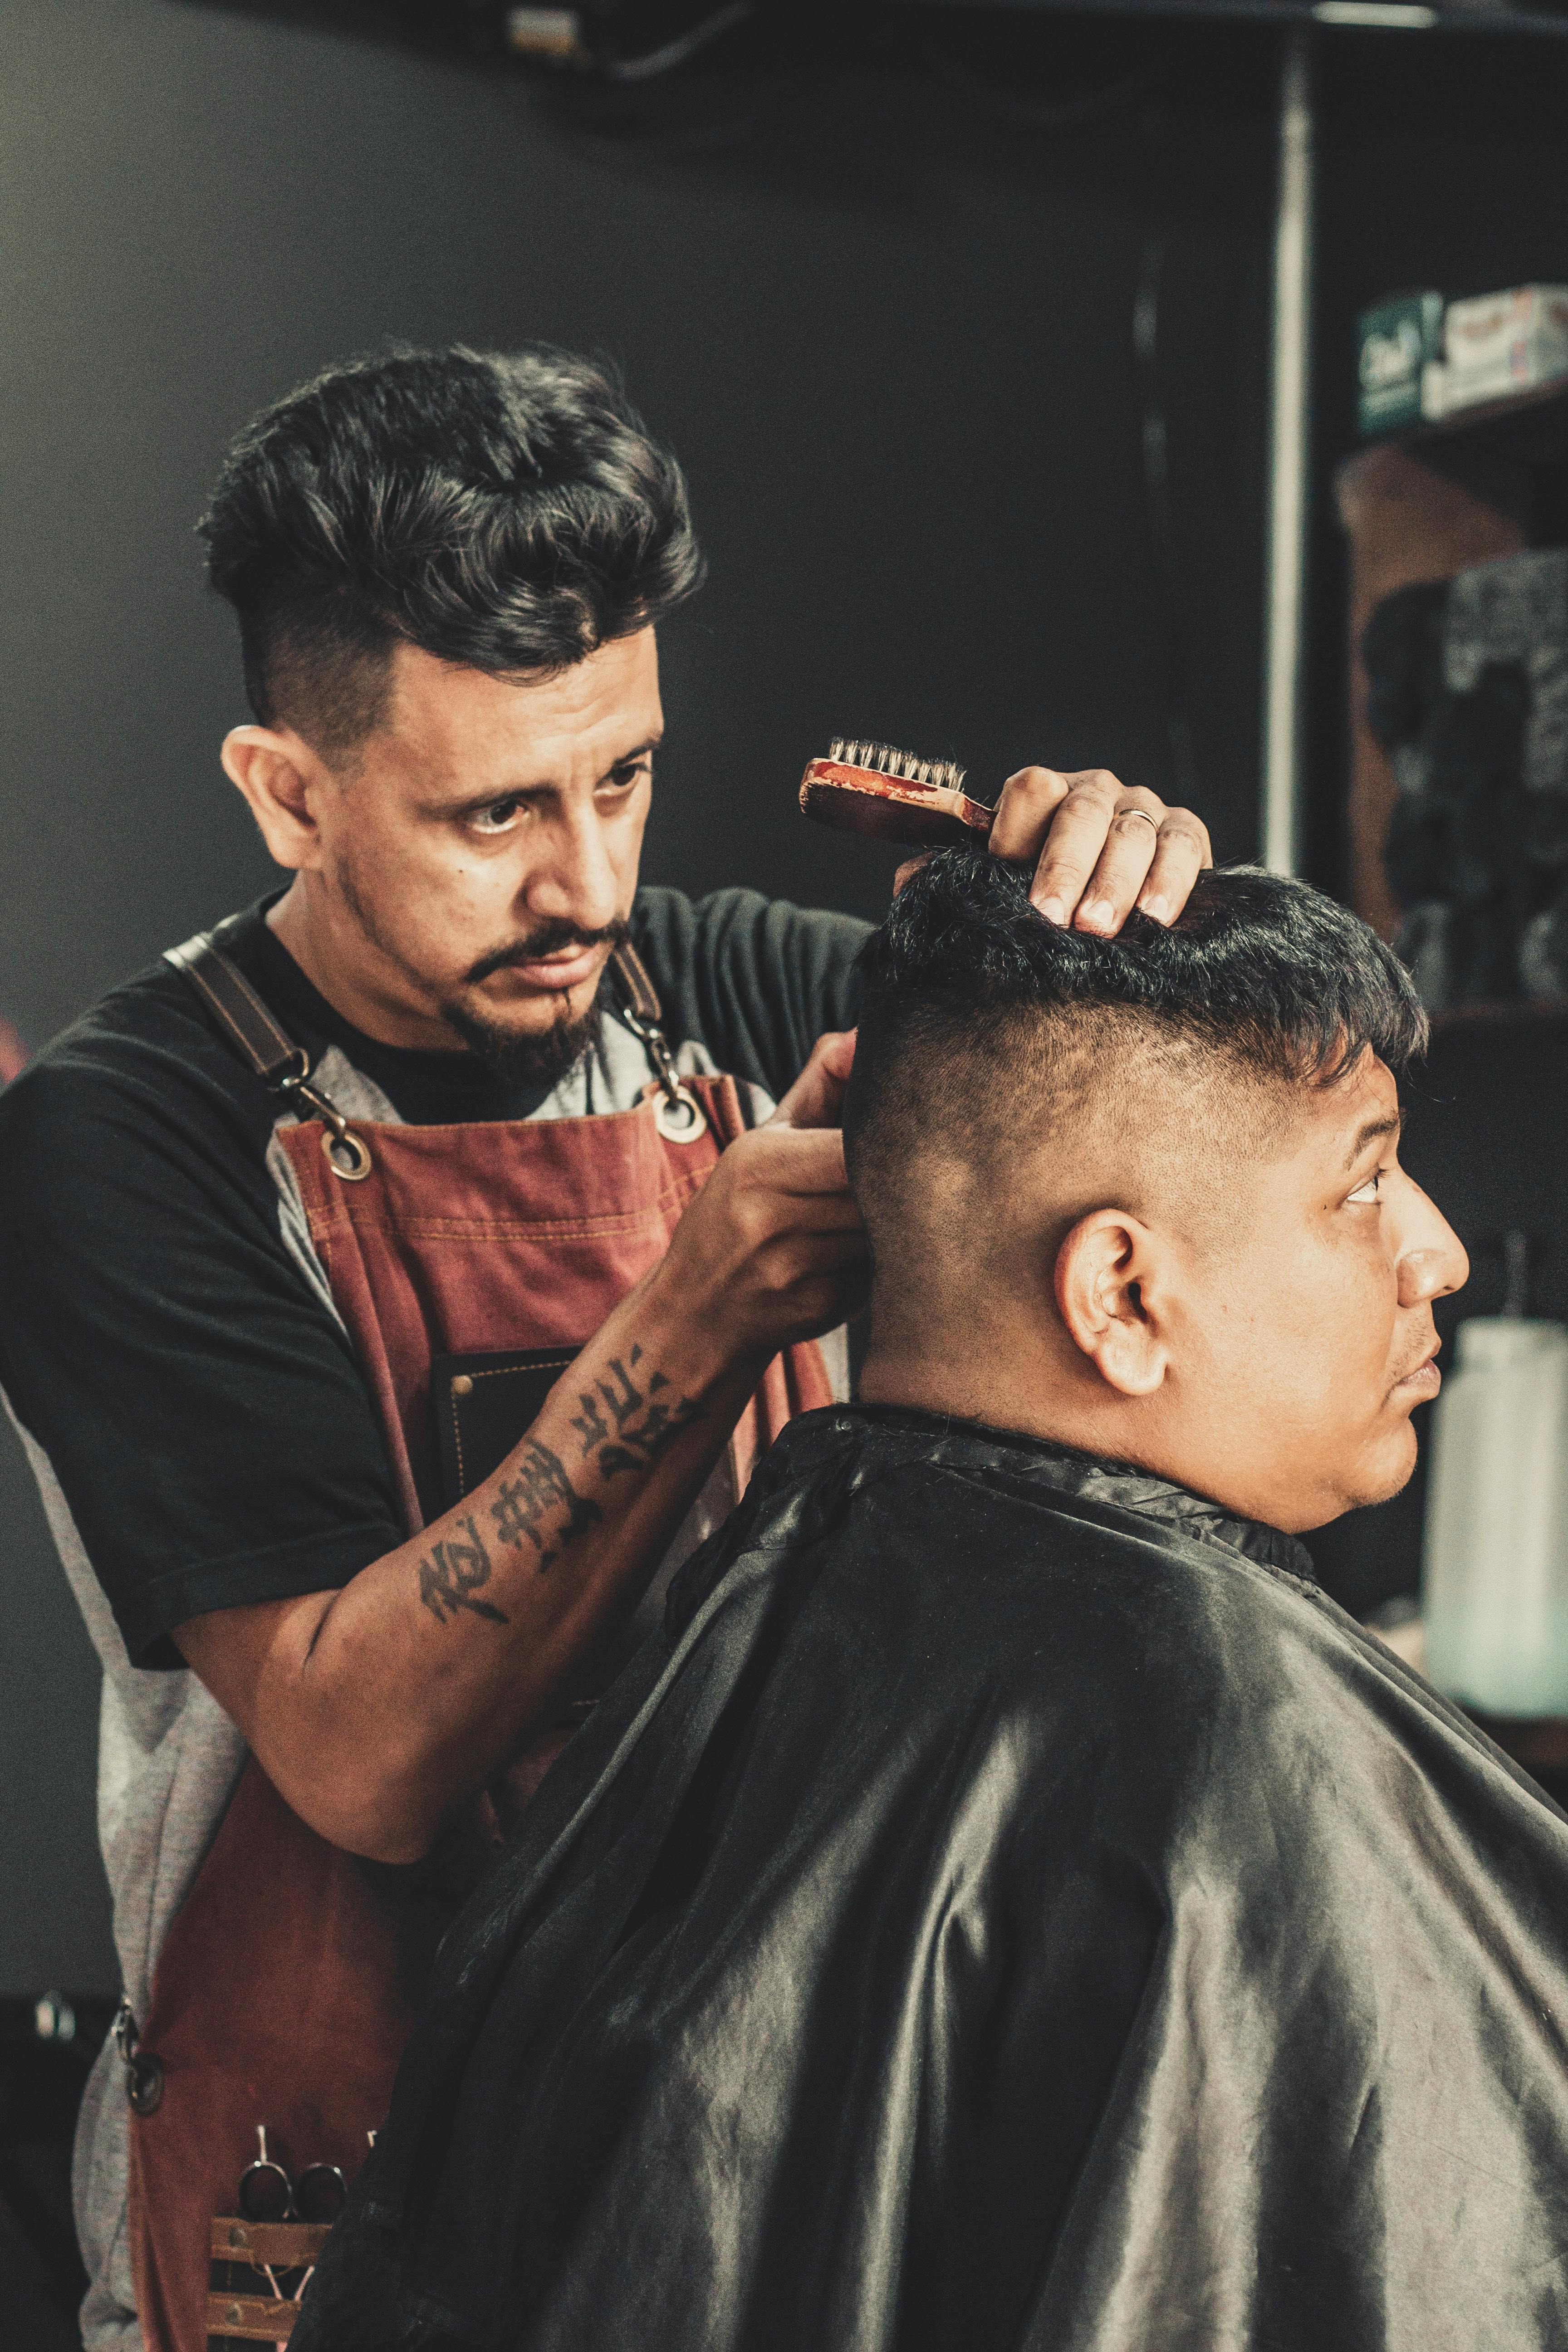 Barber Cutting Mans Hair  Free Stock Photo